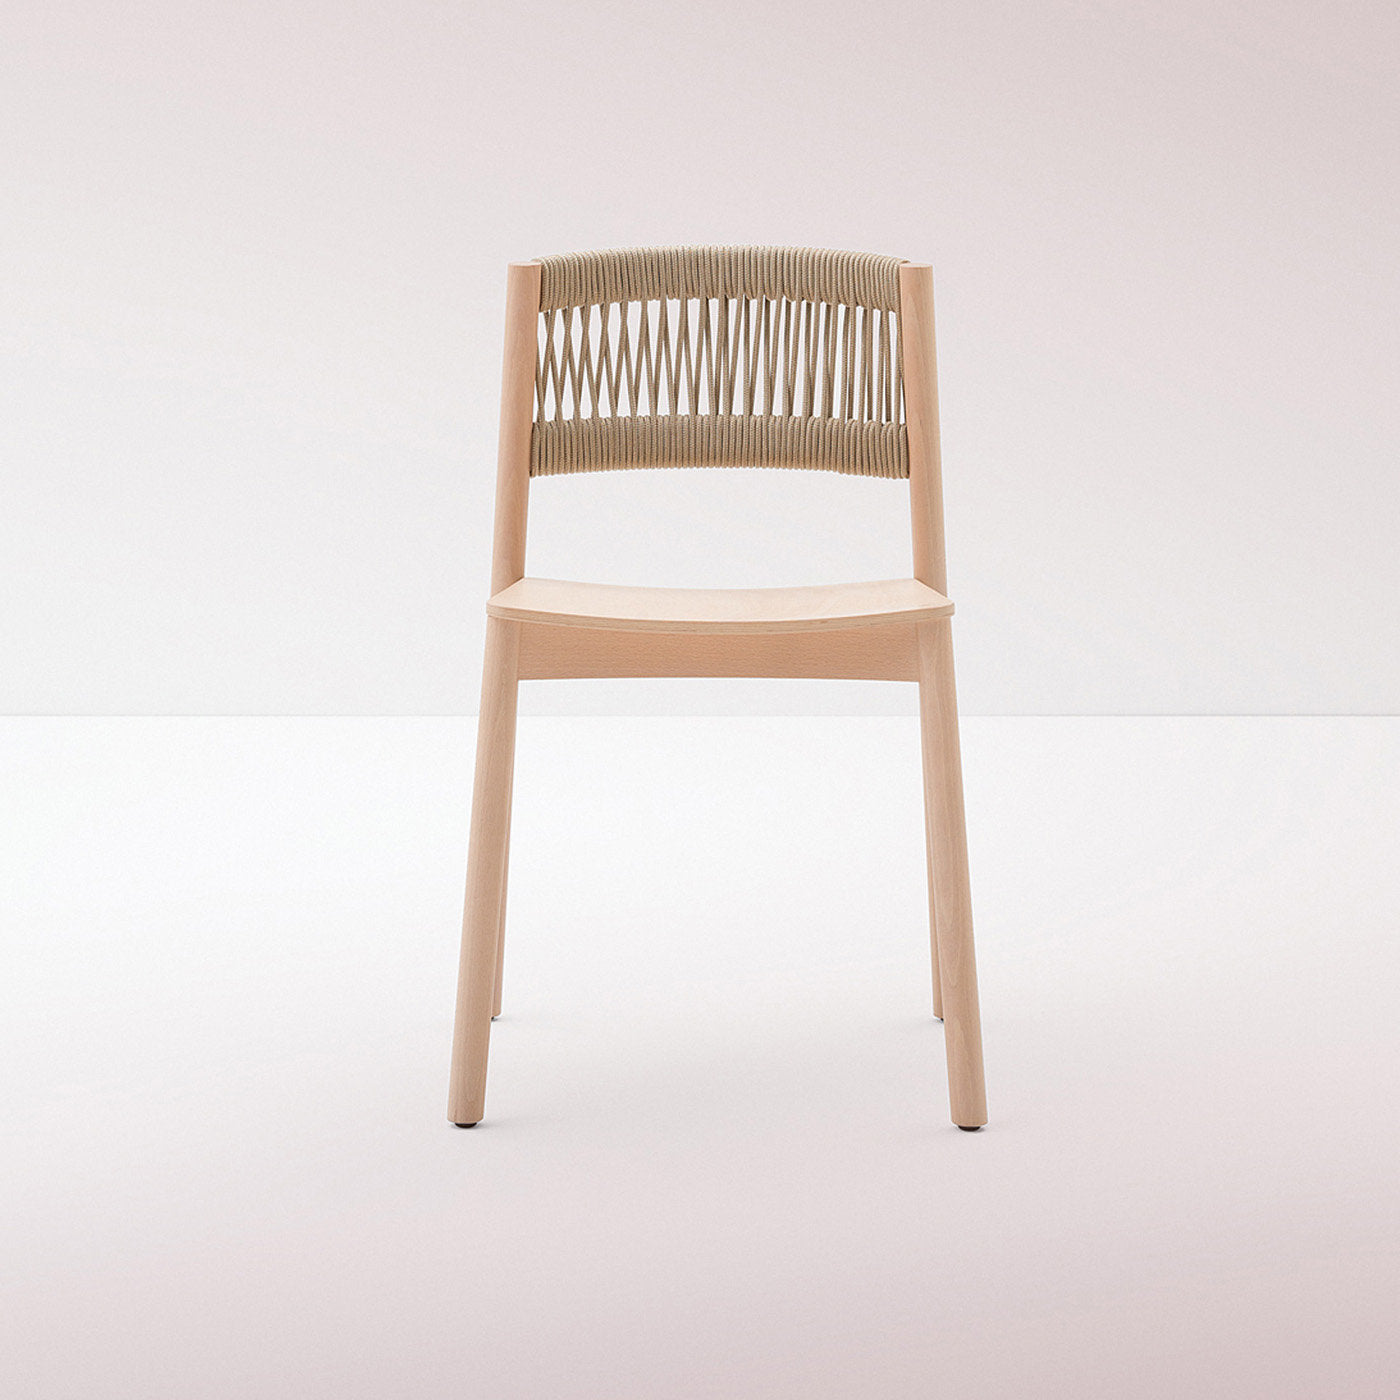 Load Chair by Emilio Nanni - Alternative view 2